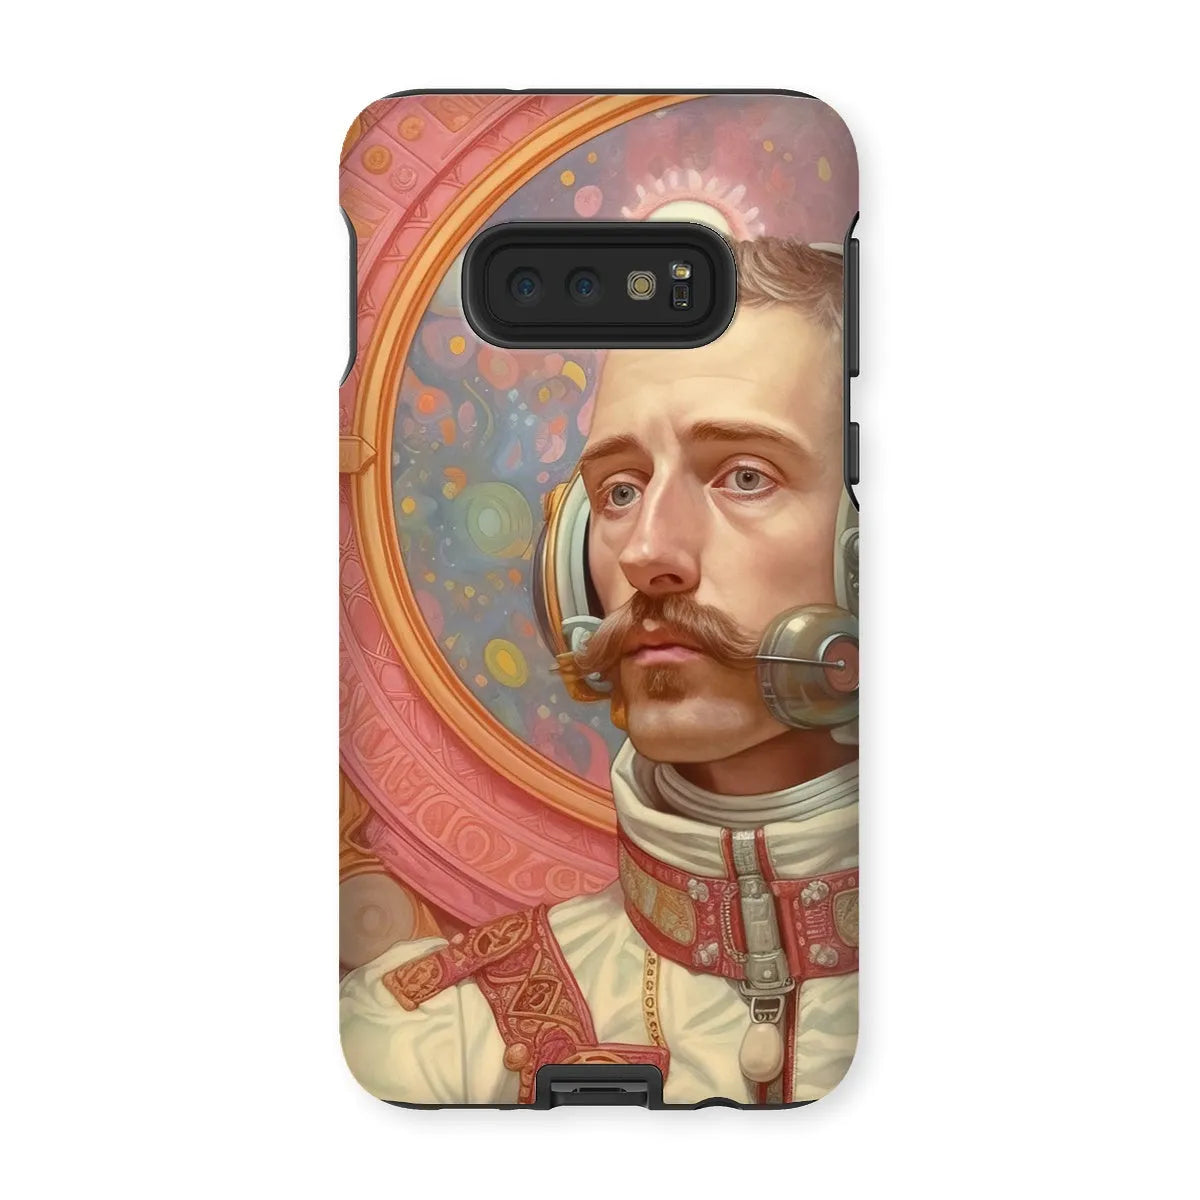 Axel The Gay Astronaut - Gay Aesthetic Art Phone Case - Samsung Galaxy S10e / Matte - Mobile Phone Cases - Aesthetic Art